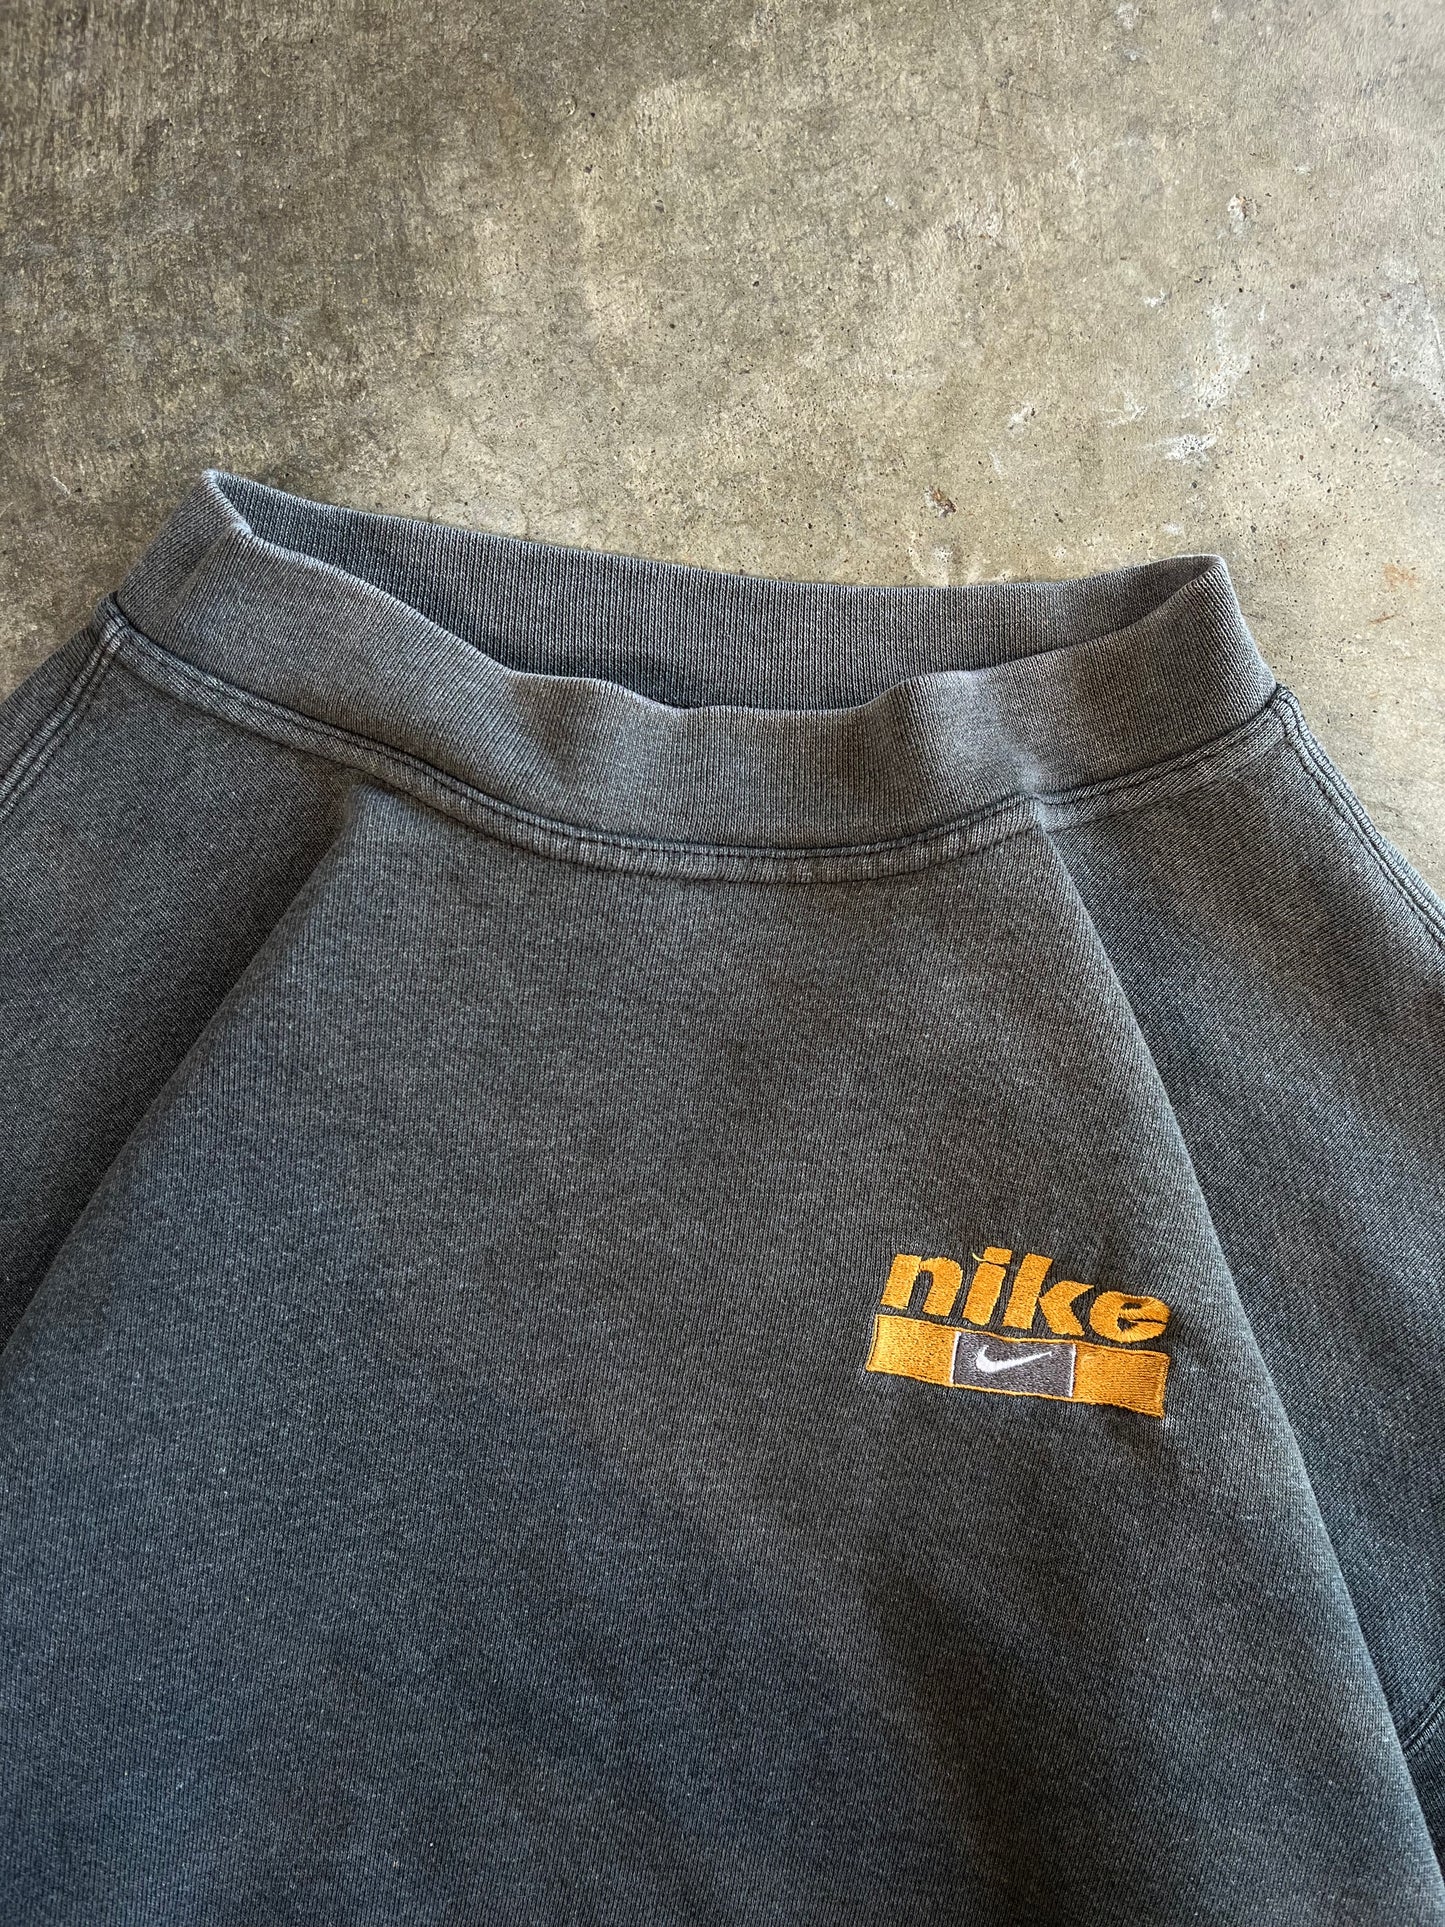 (XL) Vintage Nike Sweatshirt